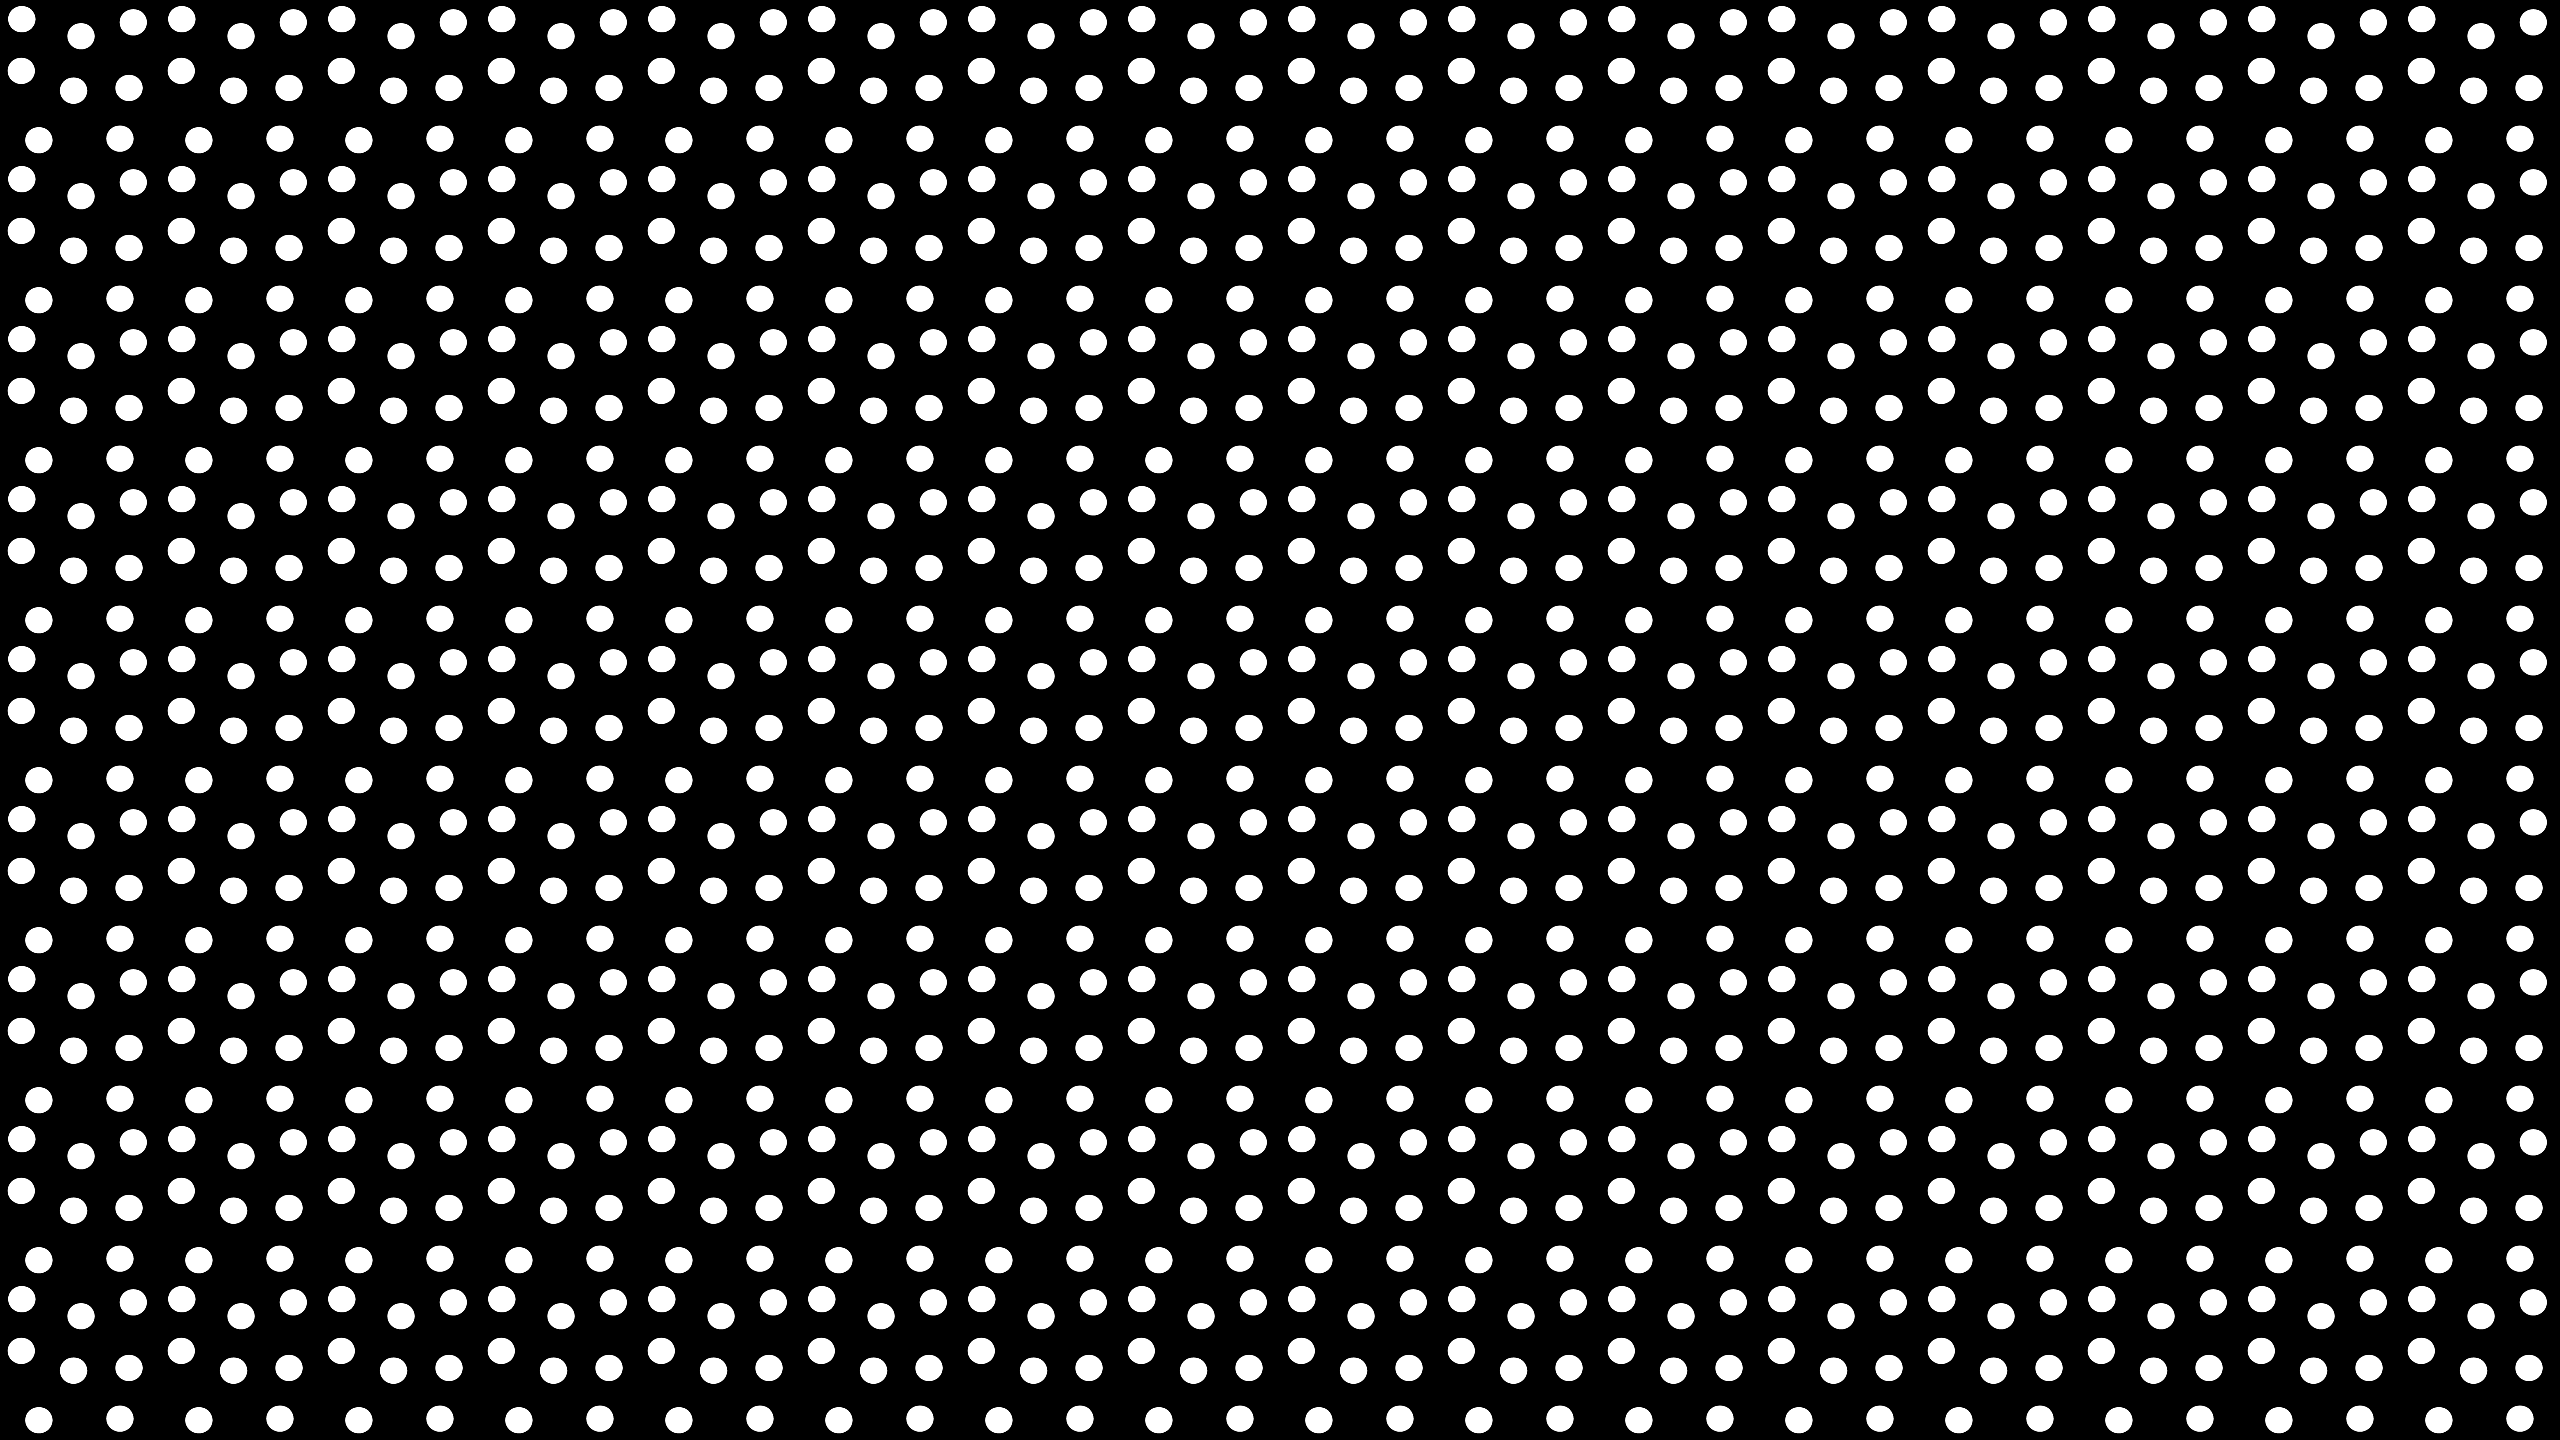 Black Polka Dots Desktop Wallpaper is easy Just save the wallpaper 2560x1440